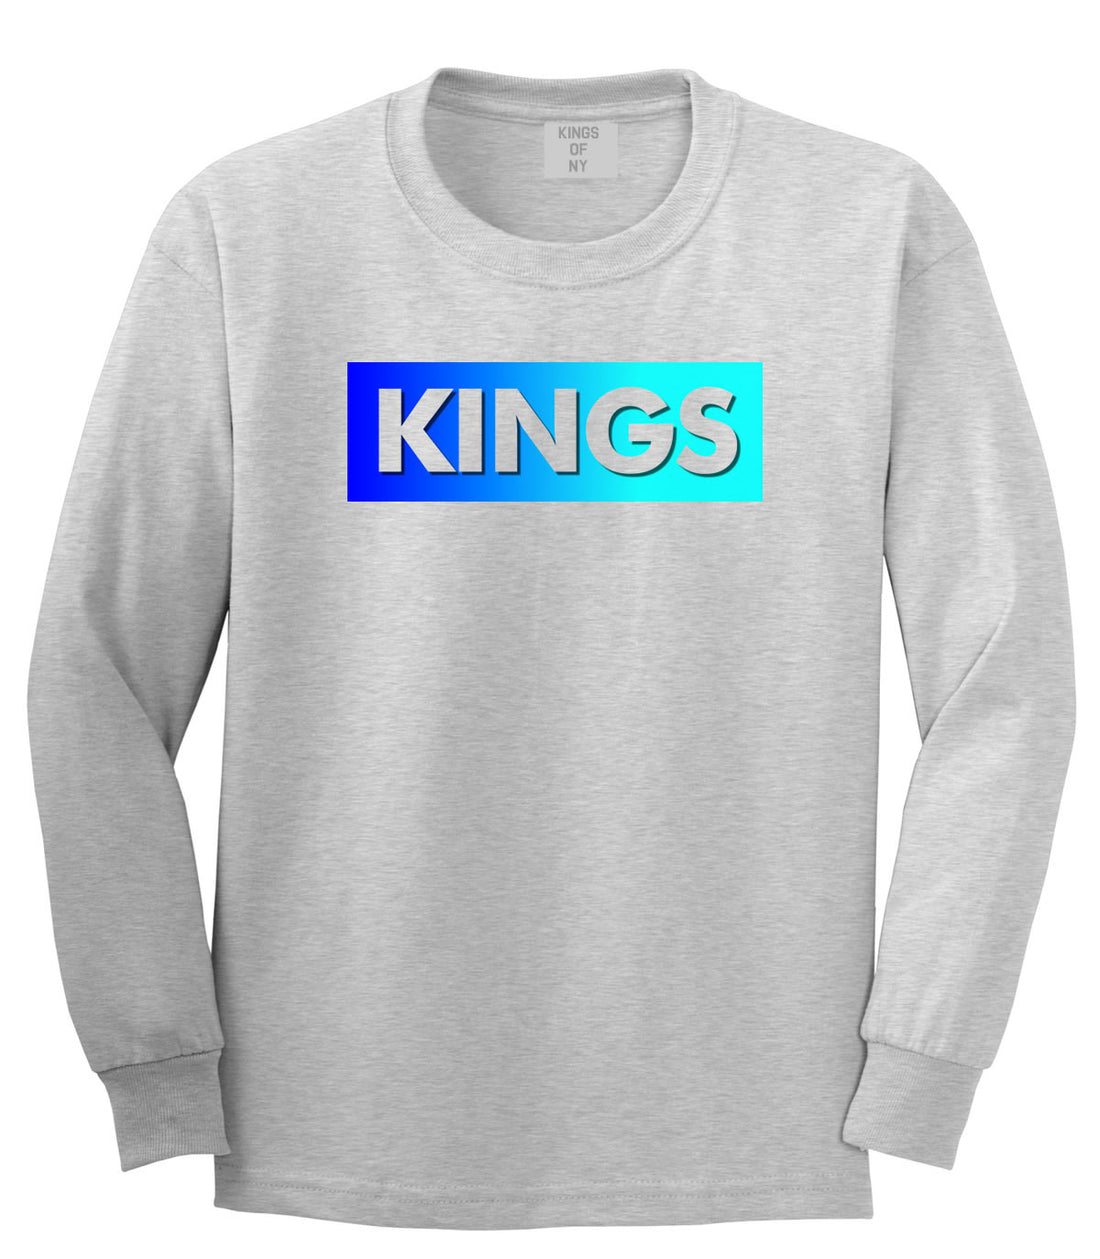 Kings Blue Gradient Boys Kids Long Sleeve T-Shirt in Grey by Kings Of NY